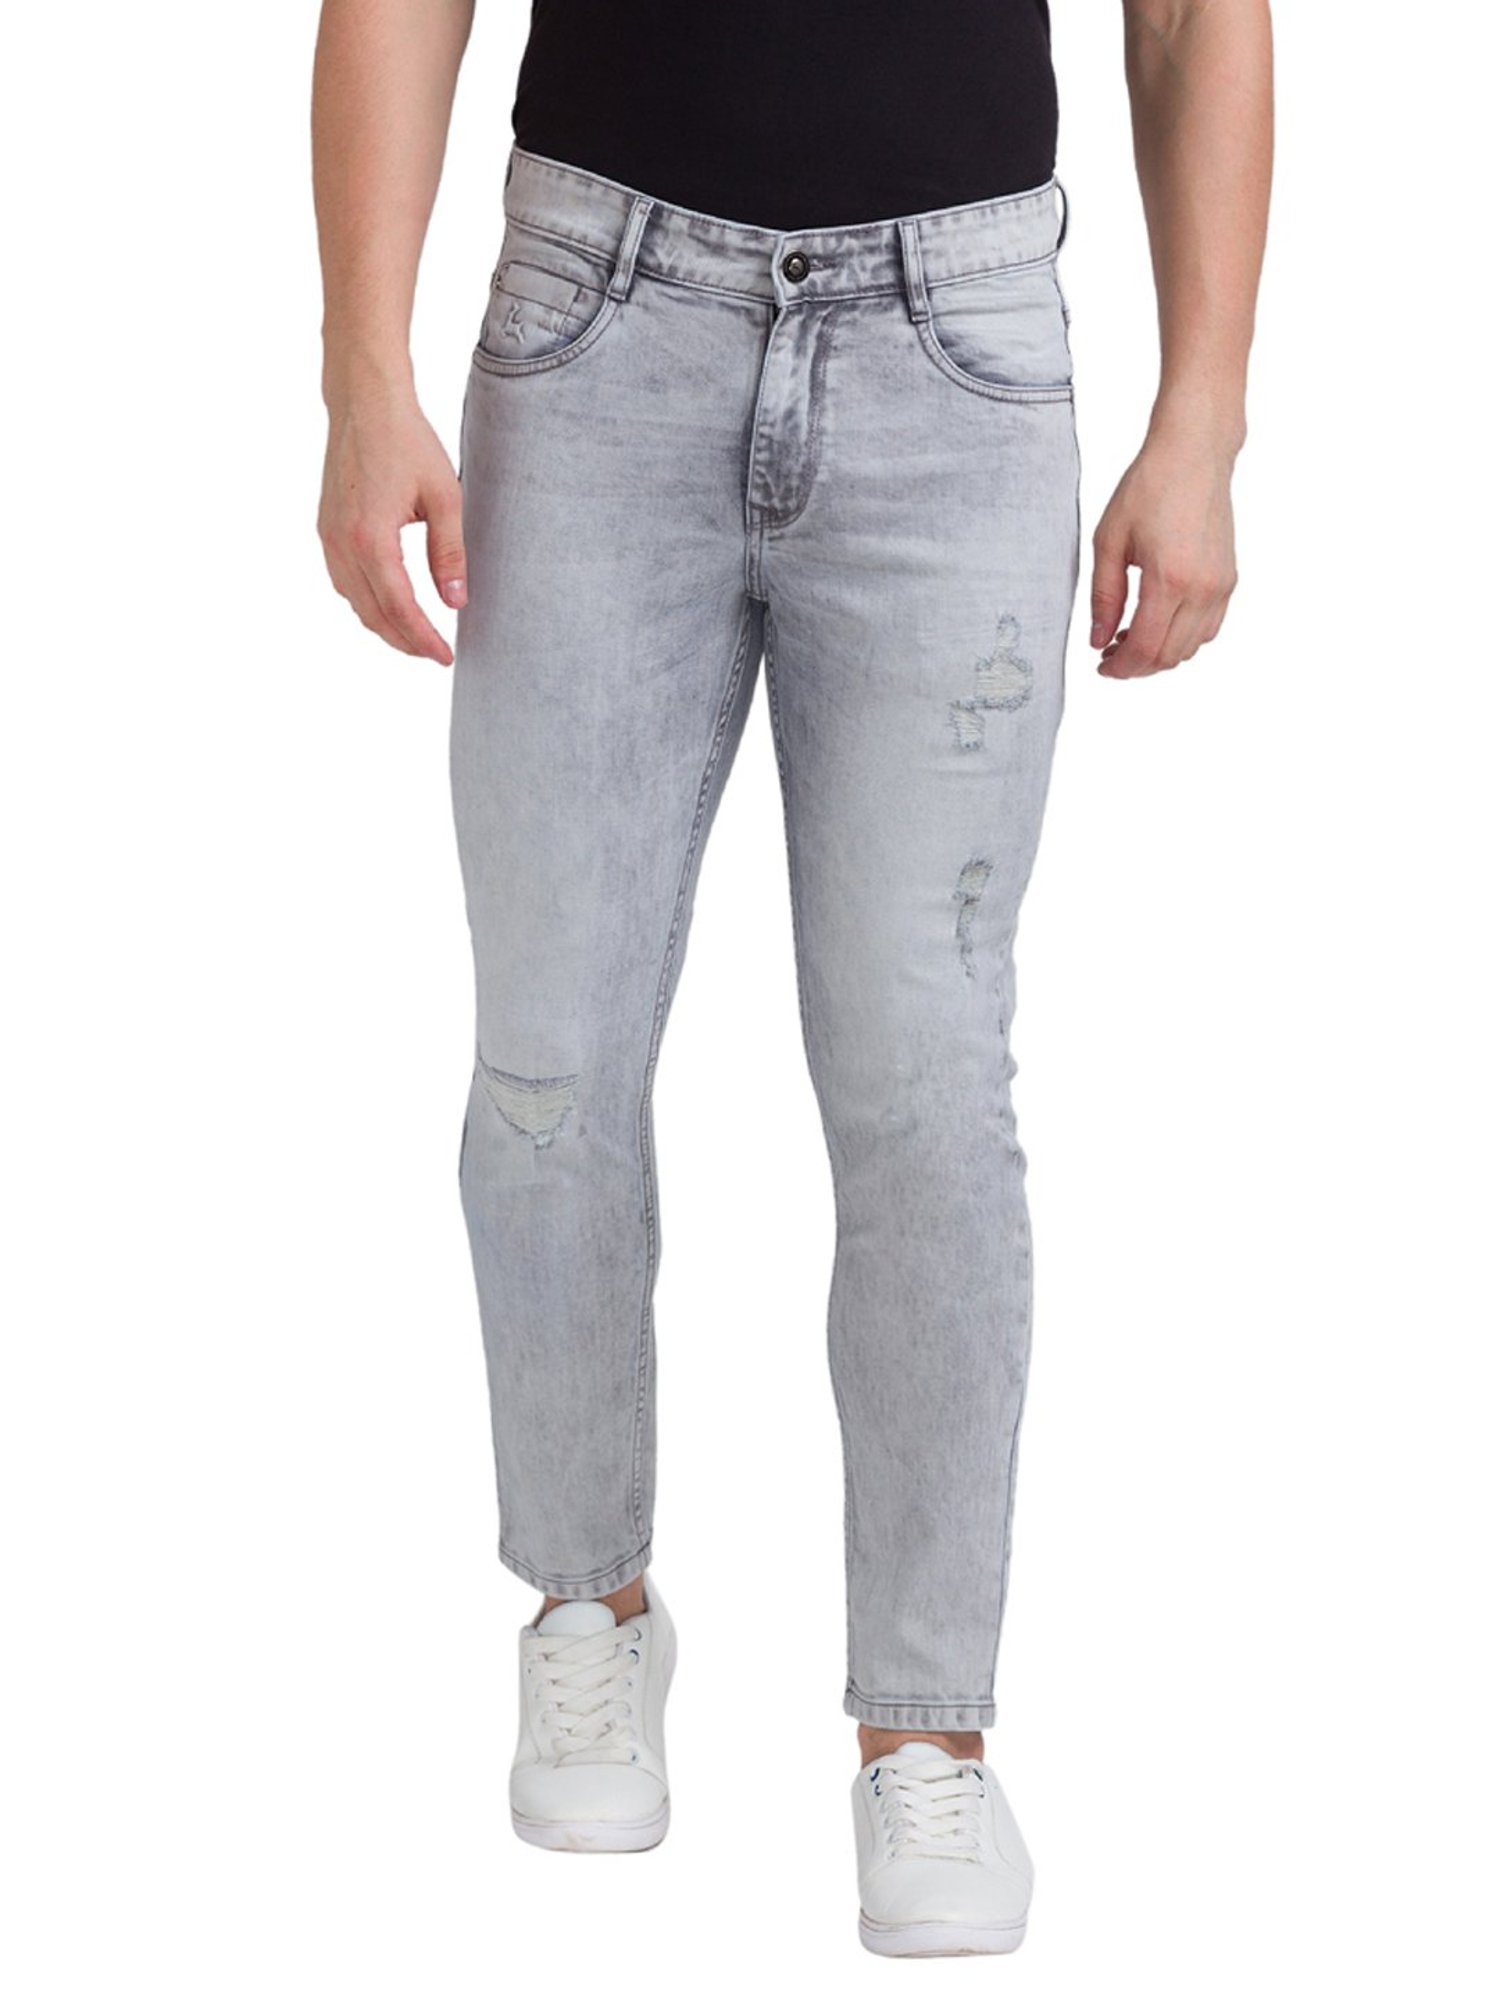 Buy Grey Denim Jeans For Men